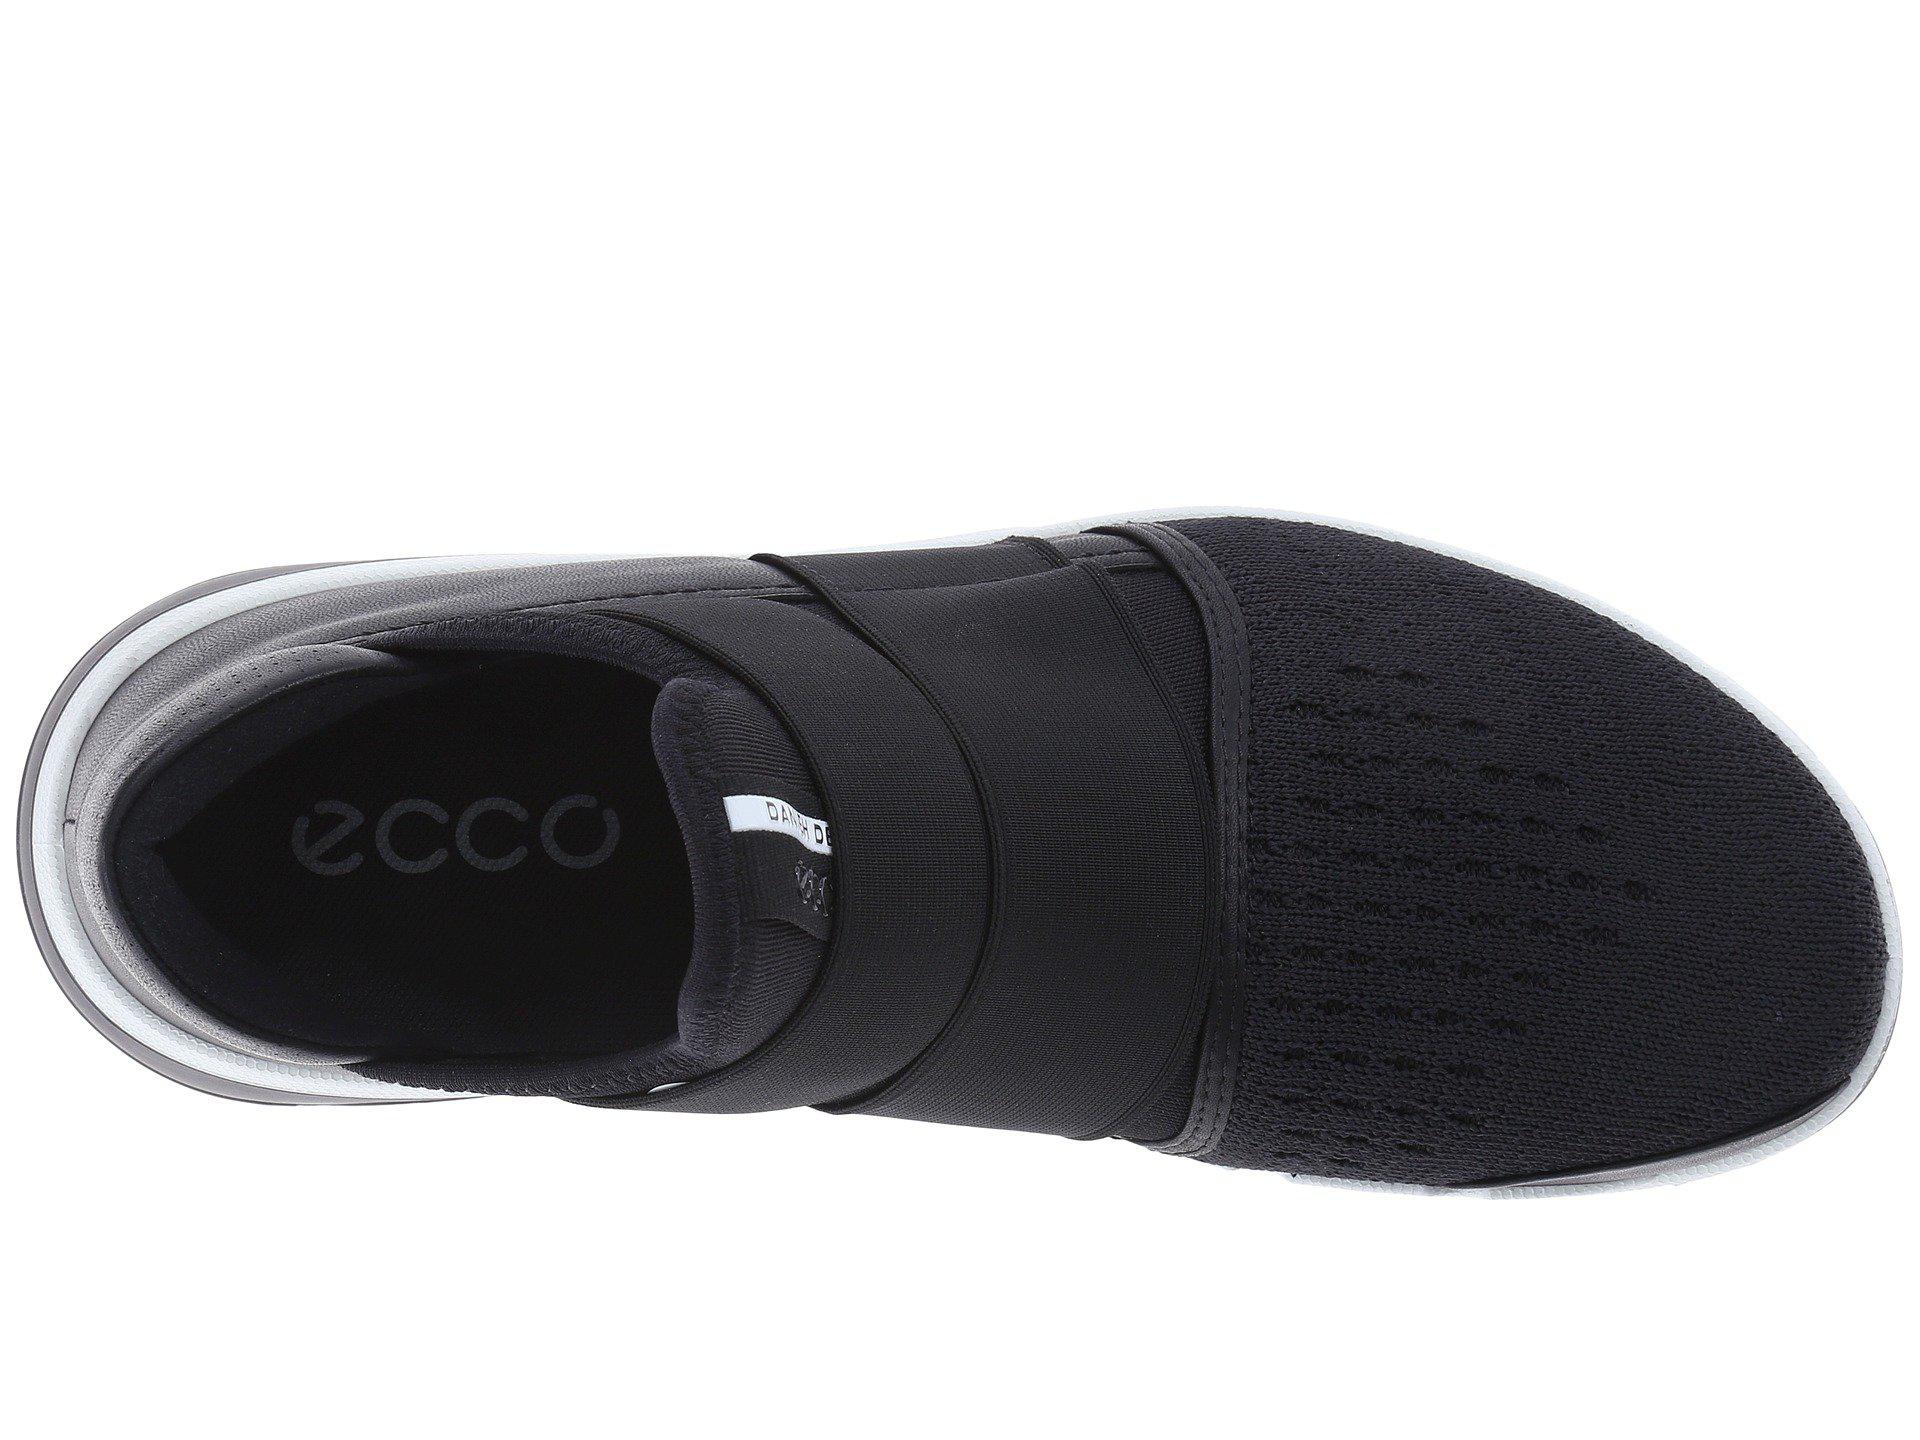 Ecco Leather Intrinsic 2 Slip-on in Black/Black (Black) for Men - Lyst